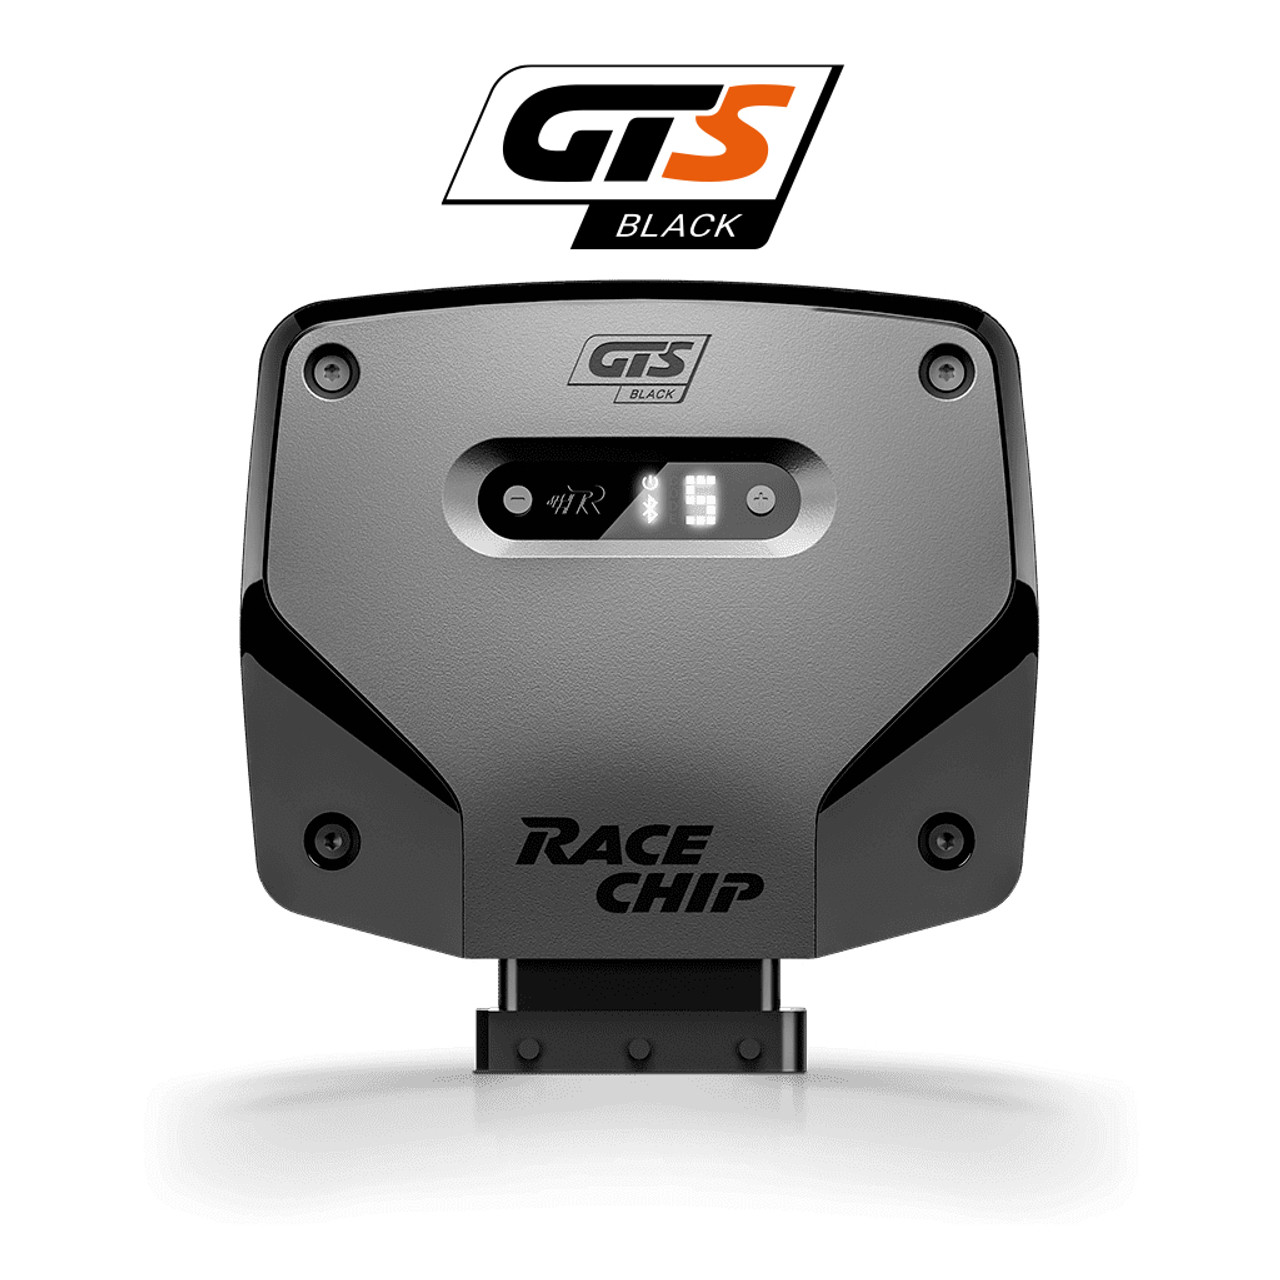 RaceChip GTS Black Tuner for B58 Powered BMW - 920685